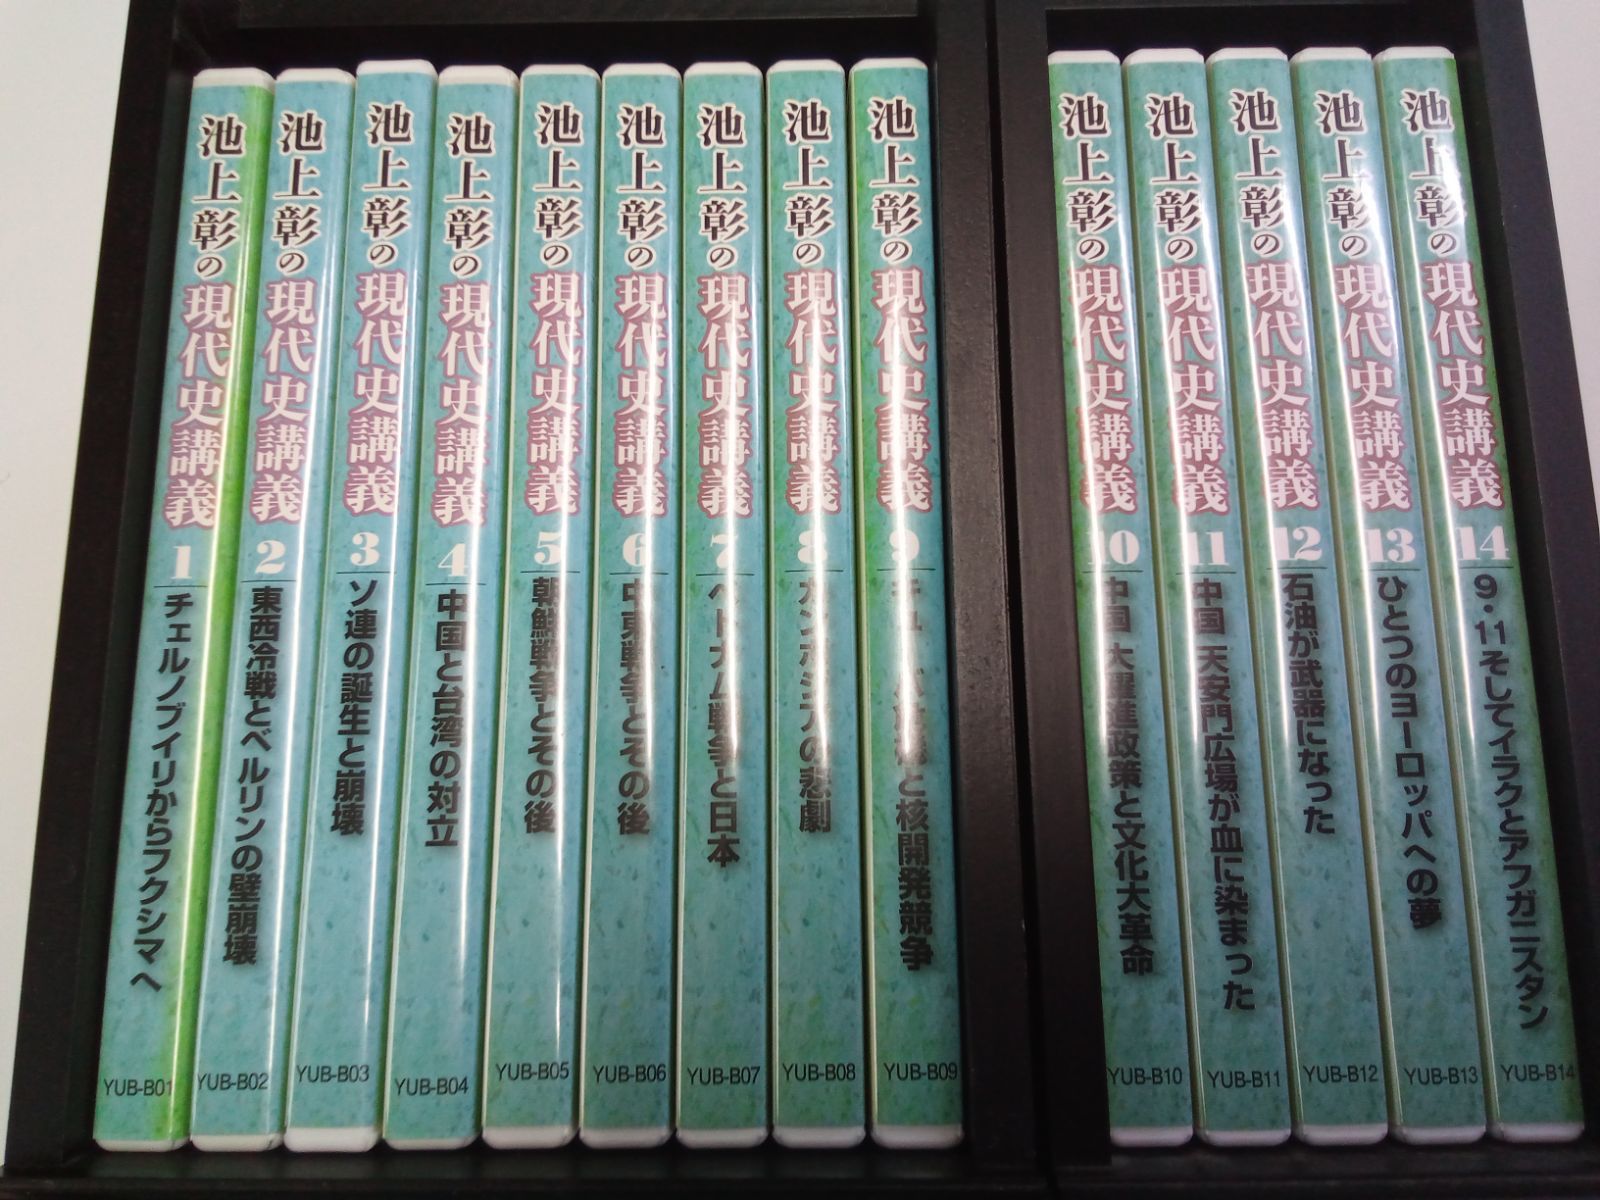 DVD-BOX】池上彰の現代史講義(全14巻)①～⑨巻セット+⑩～⑭巻セット